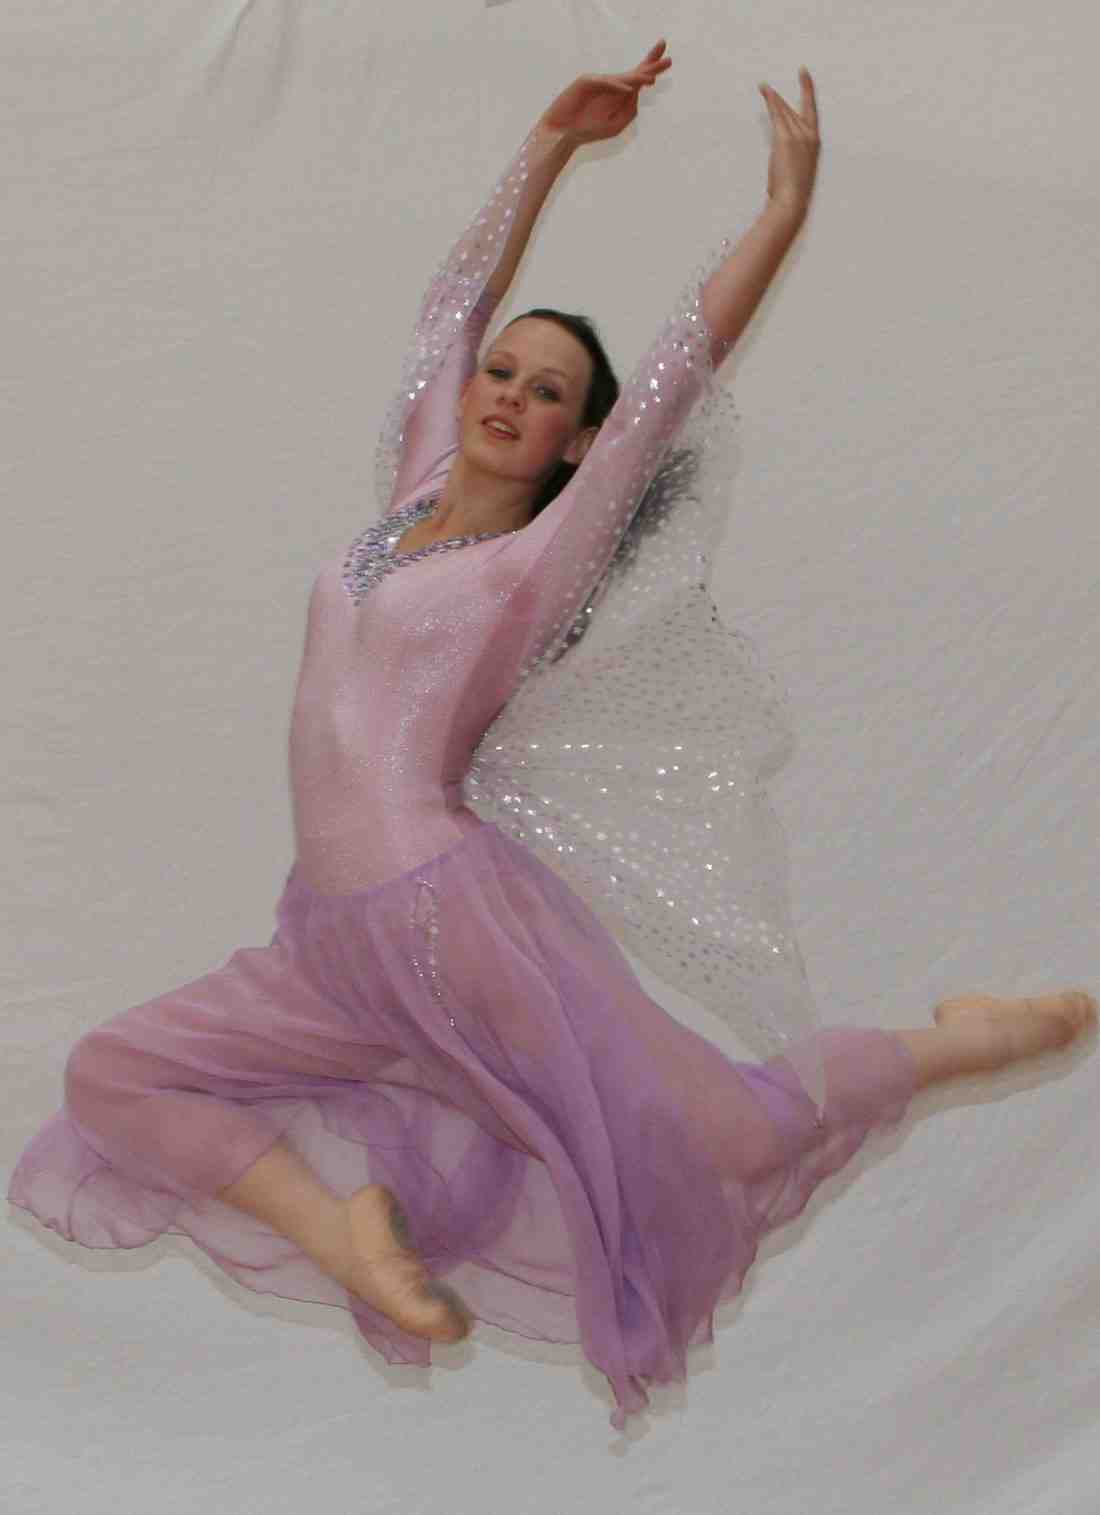 Ballet dance